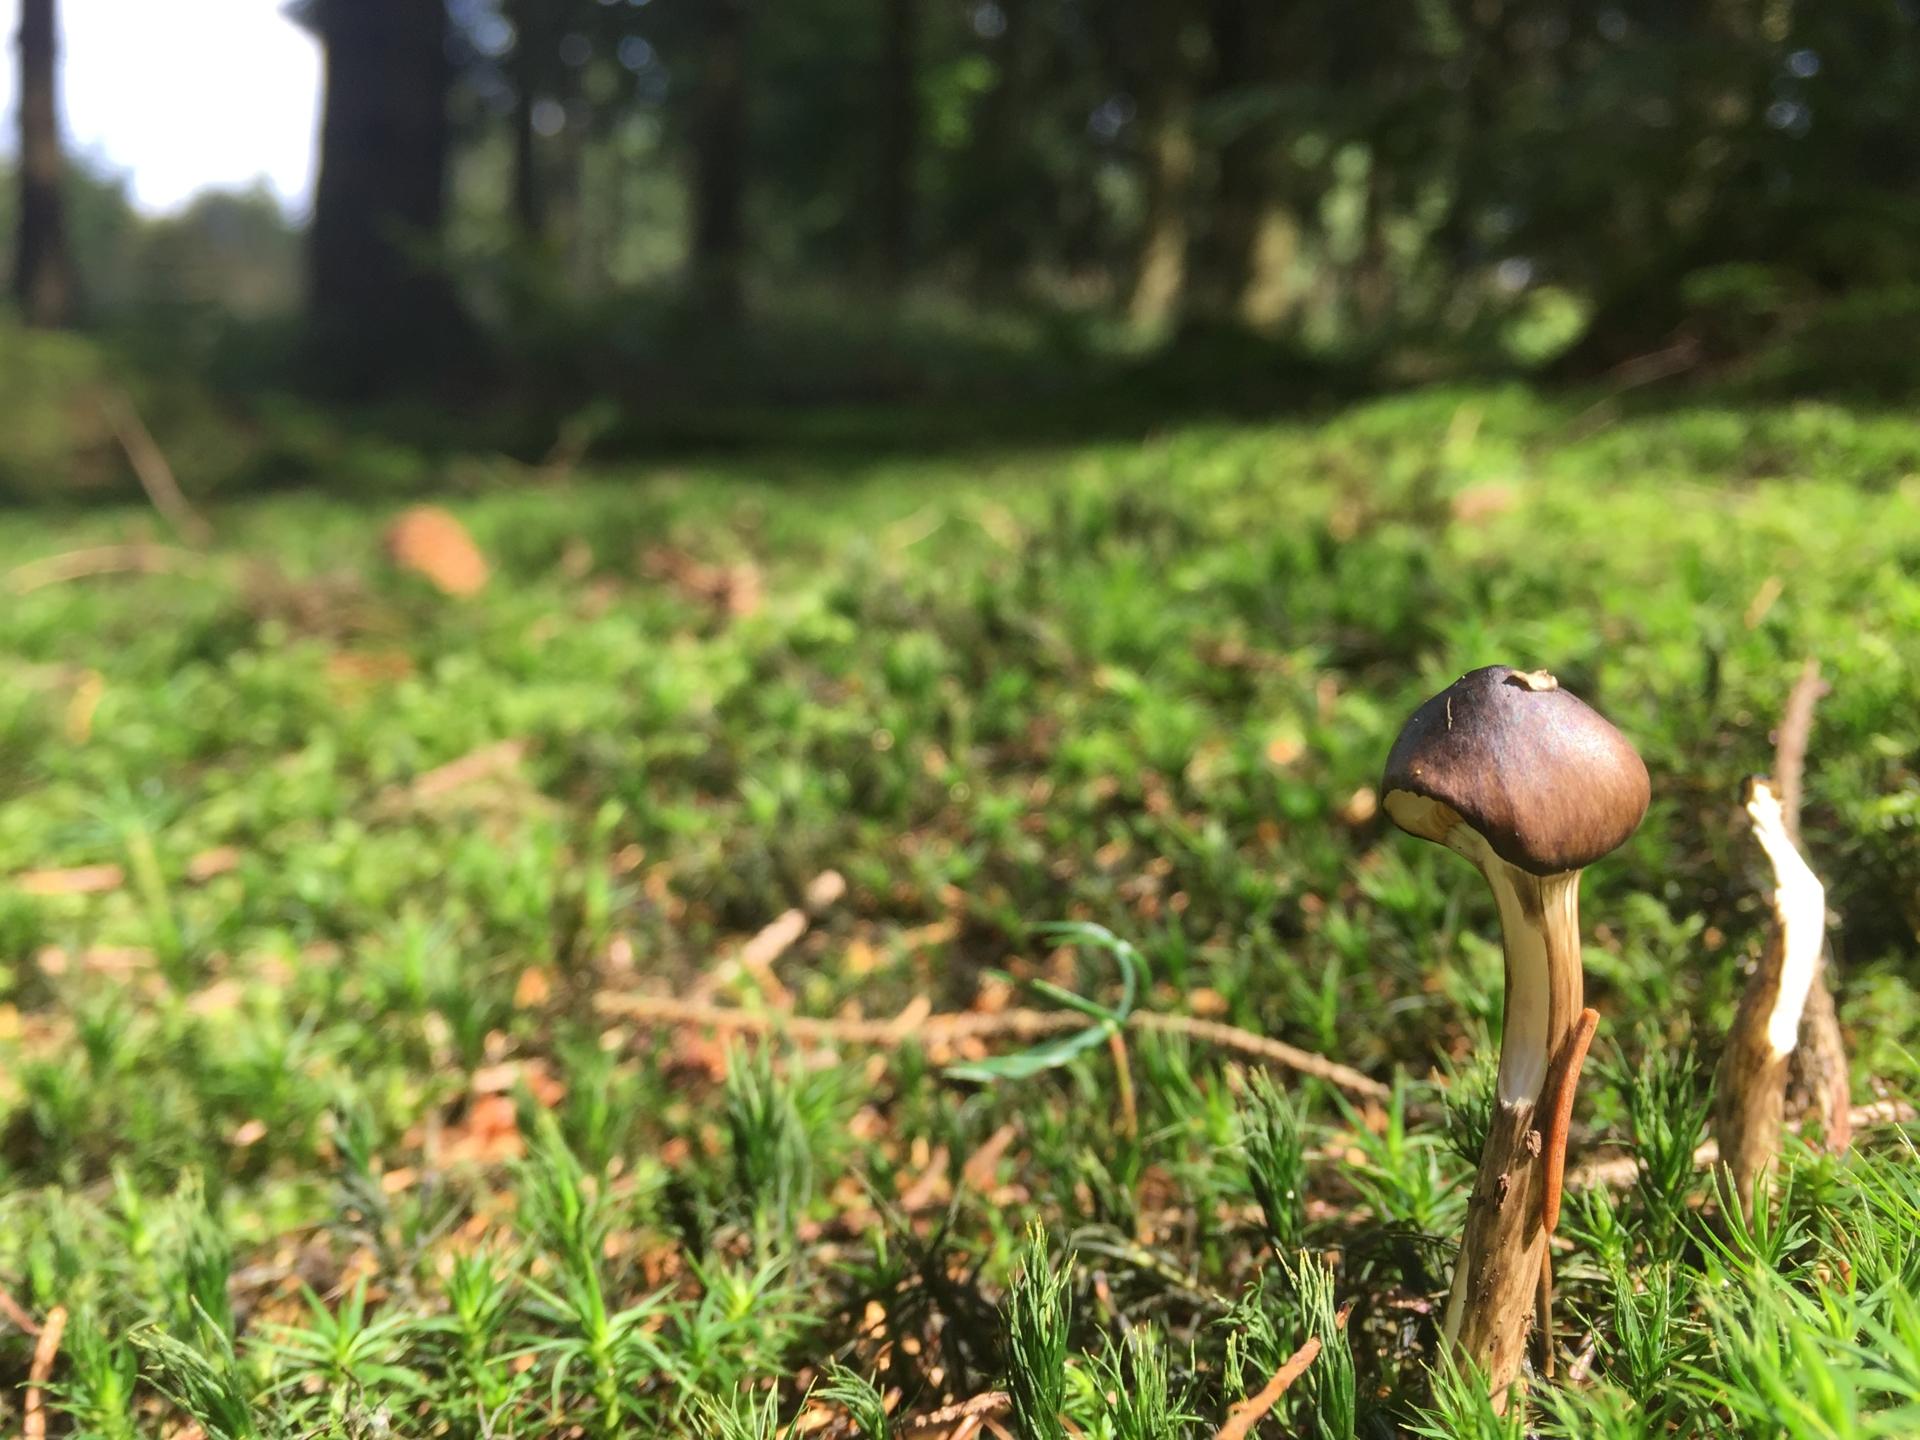 Lonley mushroom